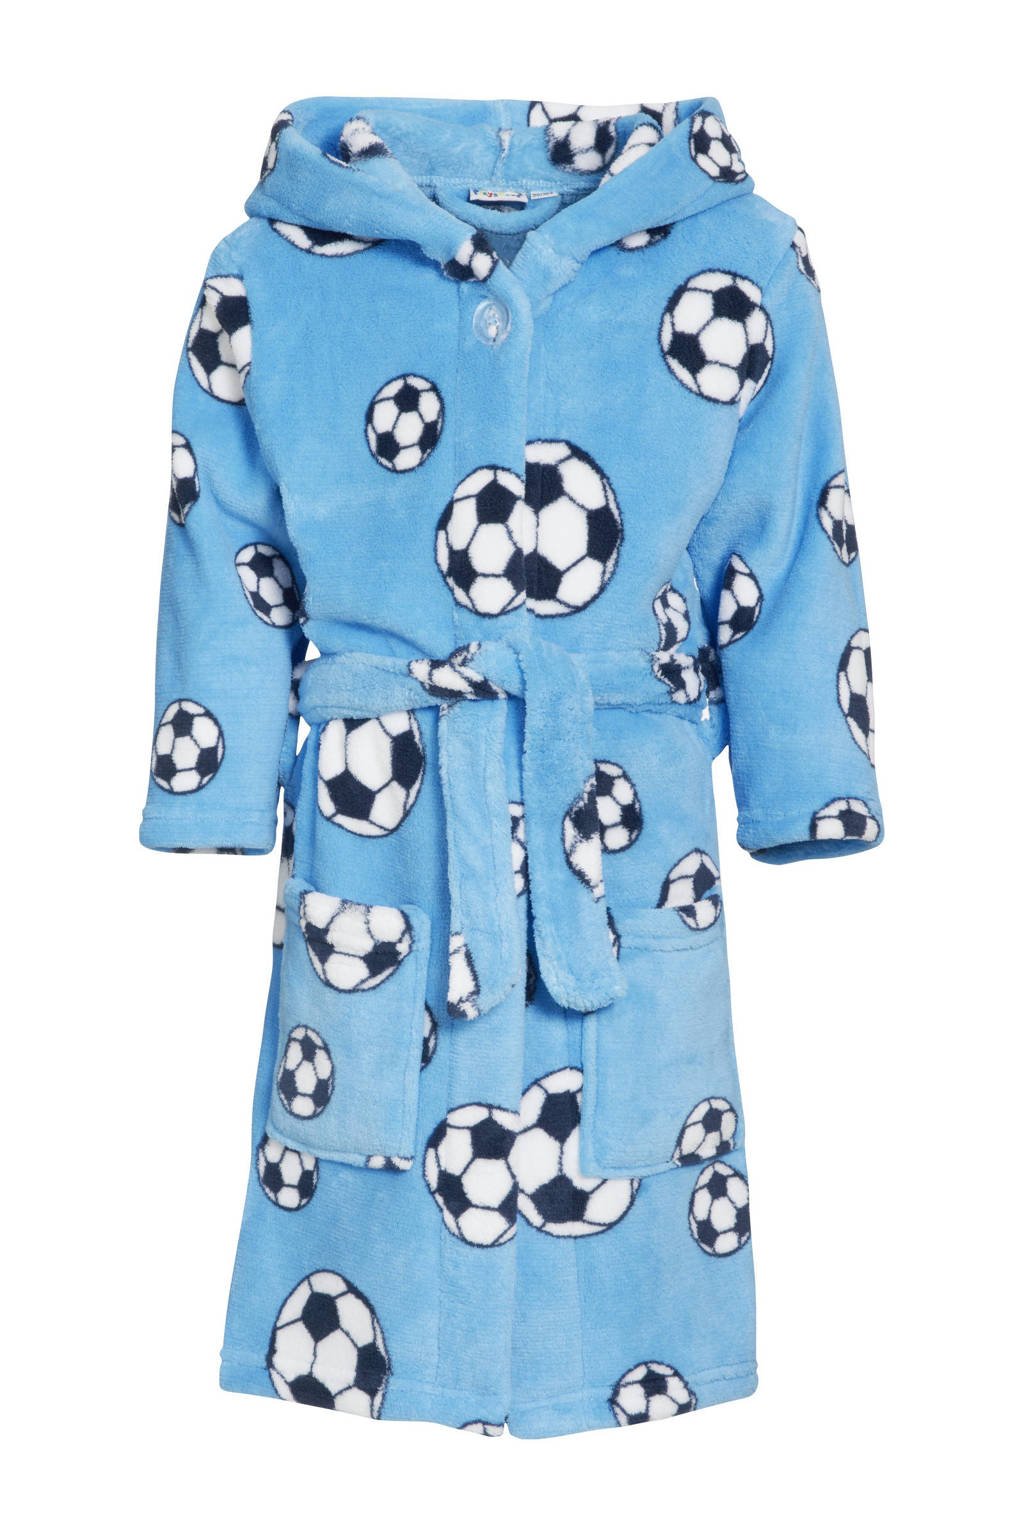 Playshoes   fleece badjas Soccer met voetbal dessin lichtblauw, Lichtblauw/wit/zwart